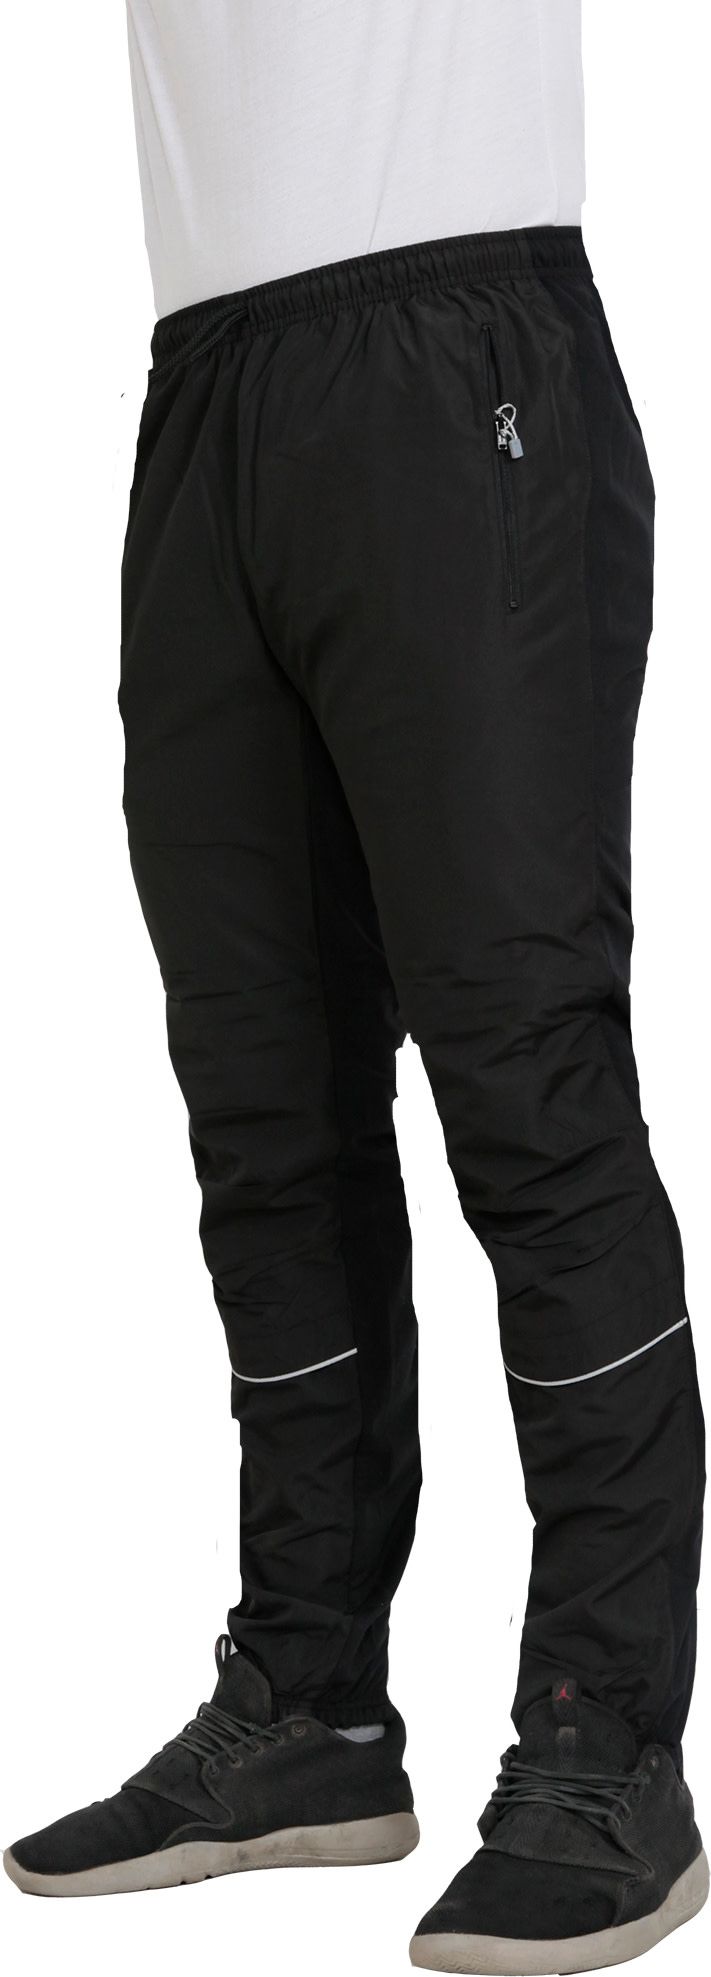 R90 Winter Training Pants Women Black 